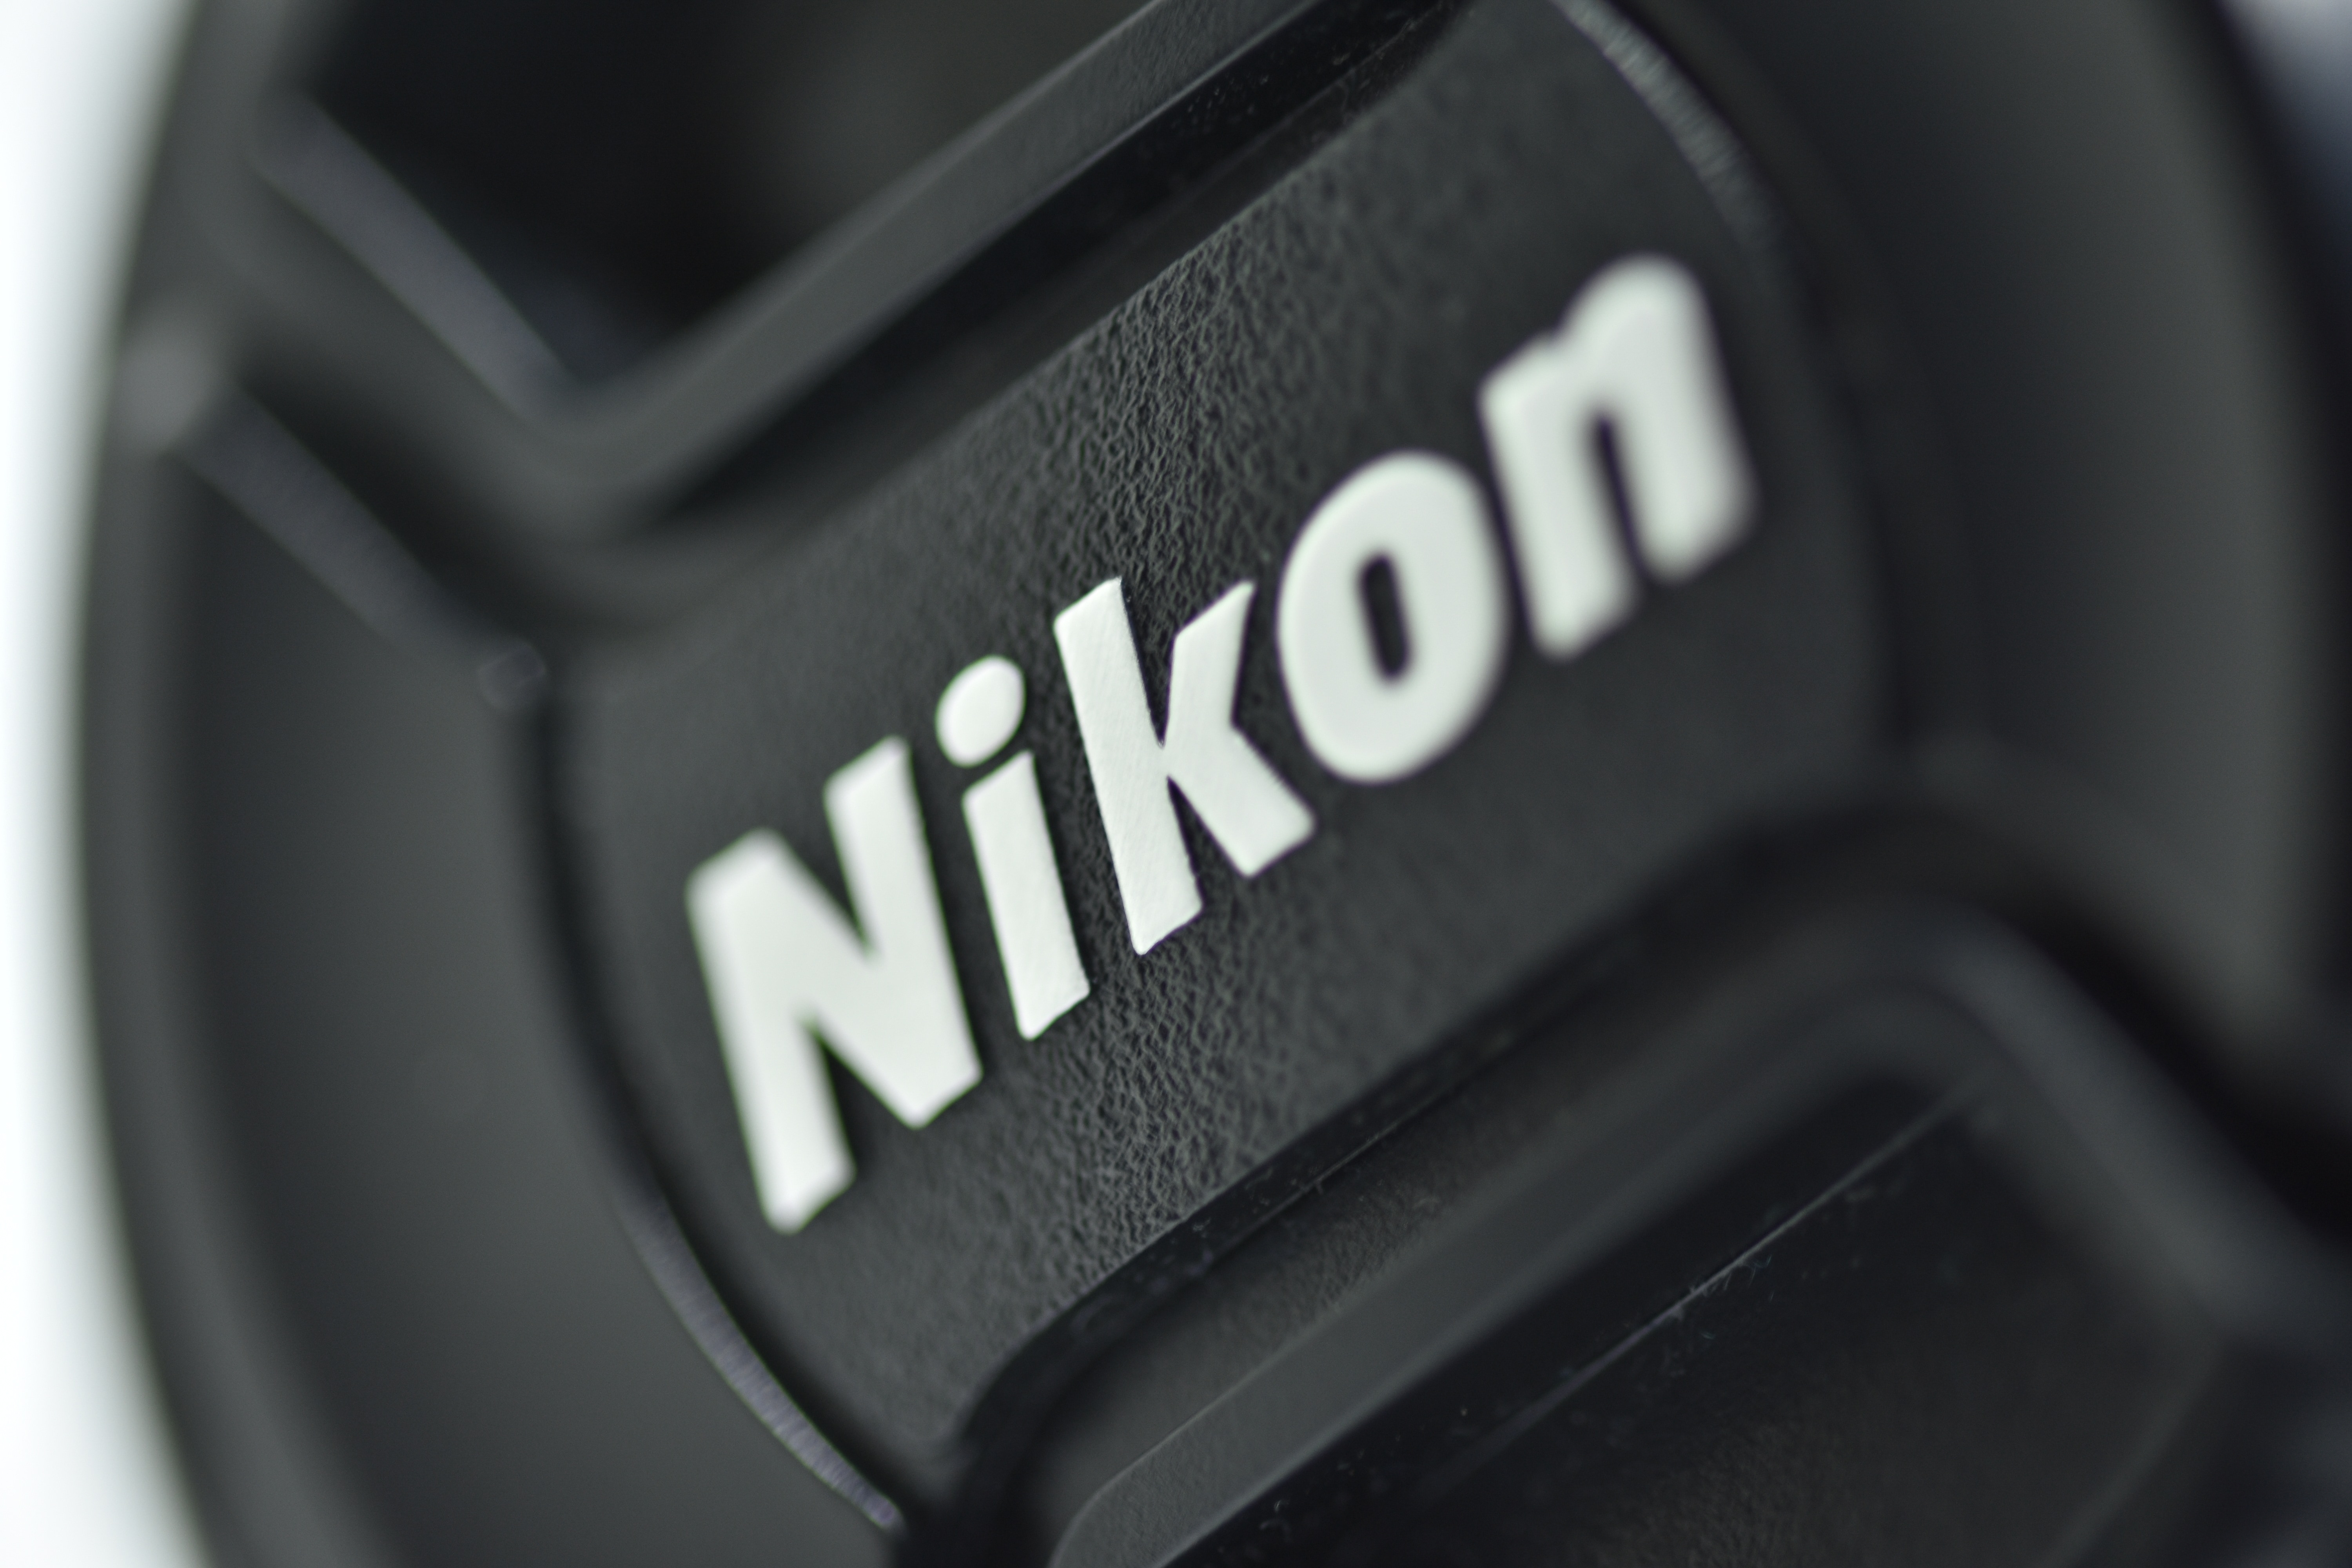 Nikon logo | Jonathan Wood | Flickr